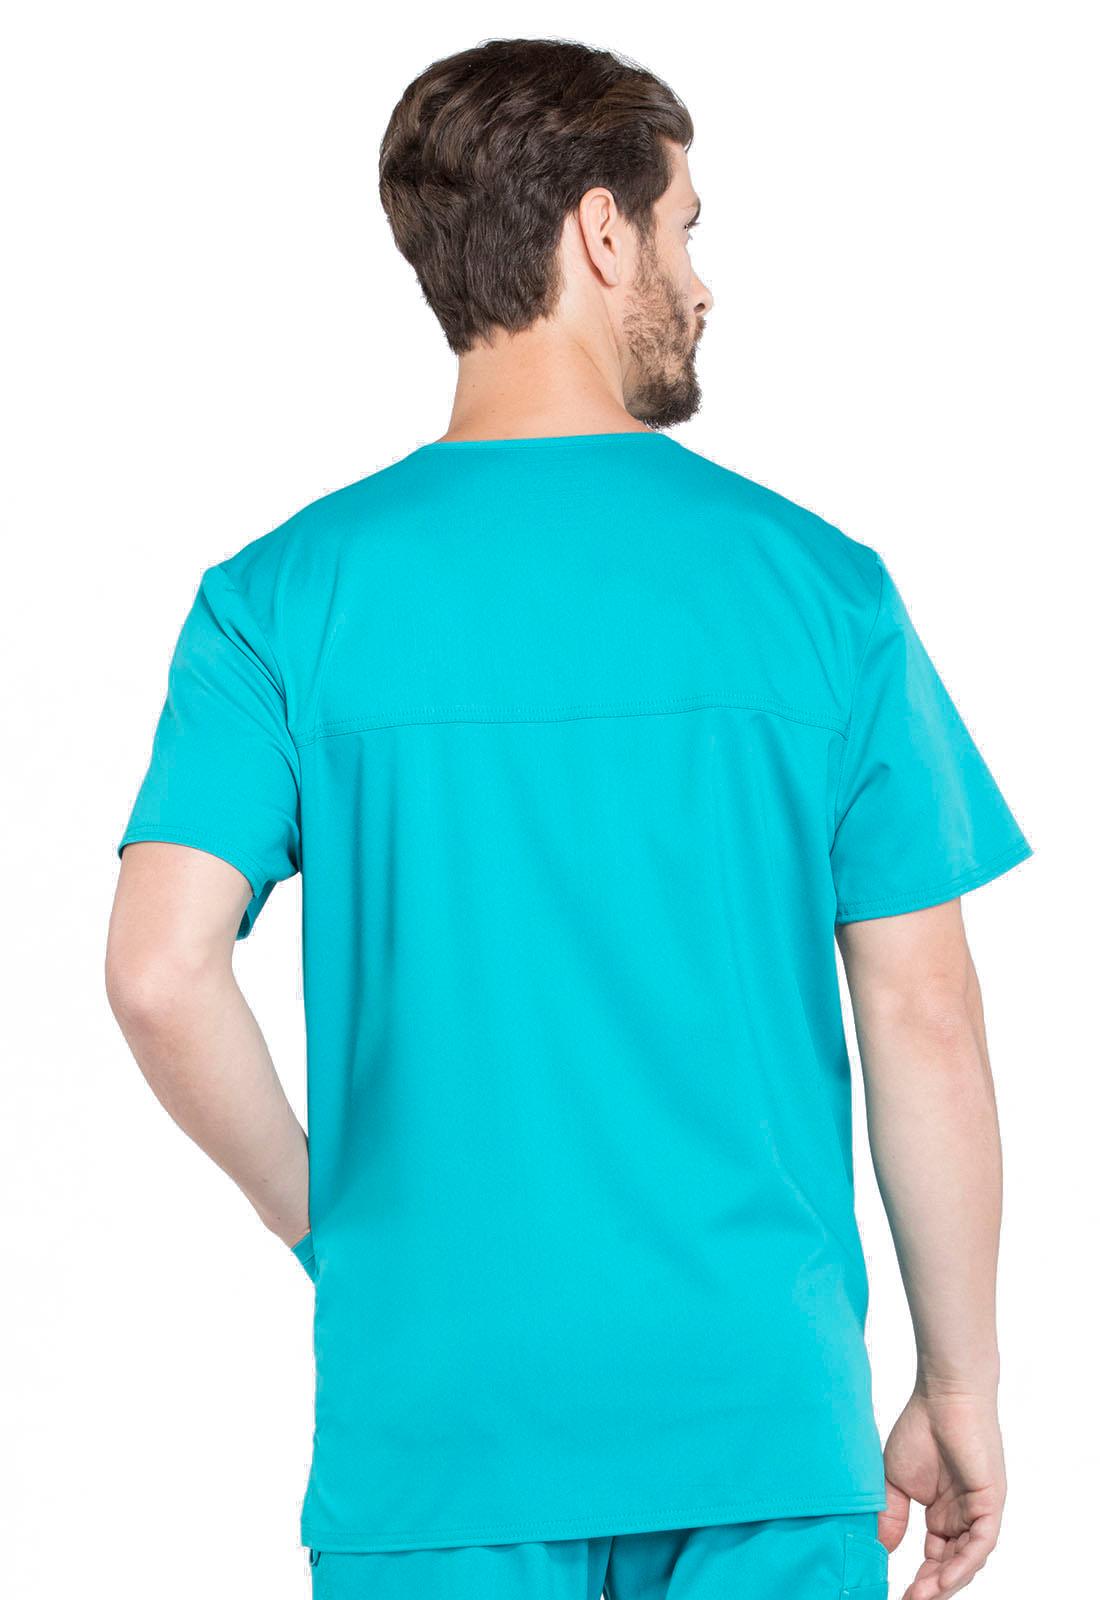 Male V-Neck Top W/ Embroidered Logo (RN Program) - Jay's Uniform